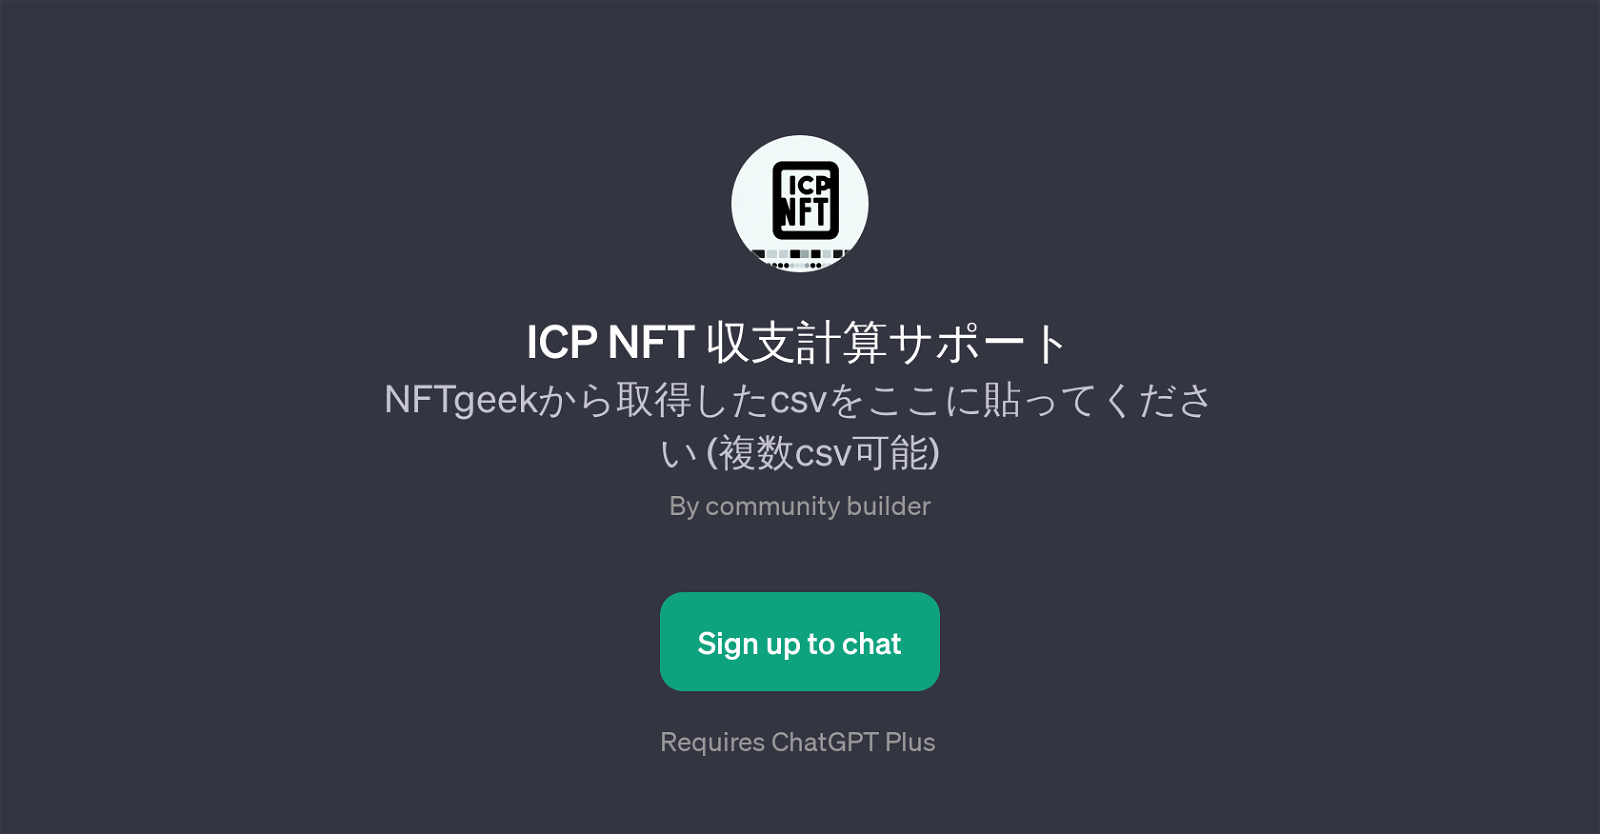 ICP NFT website